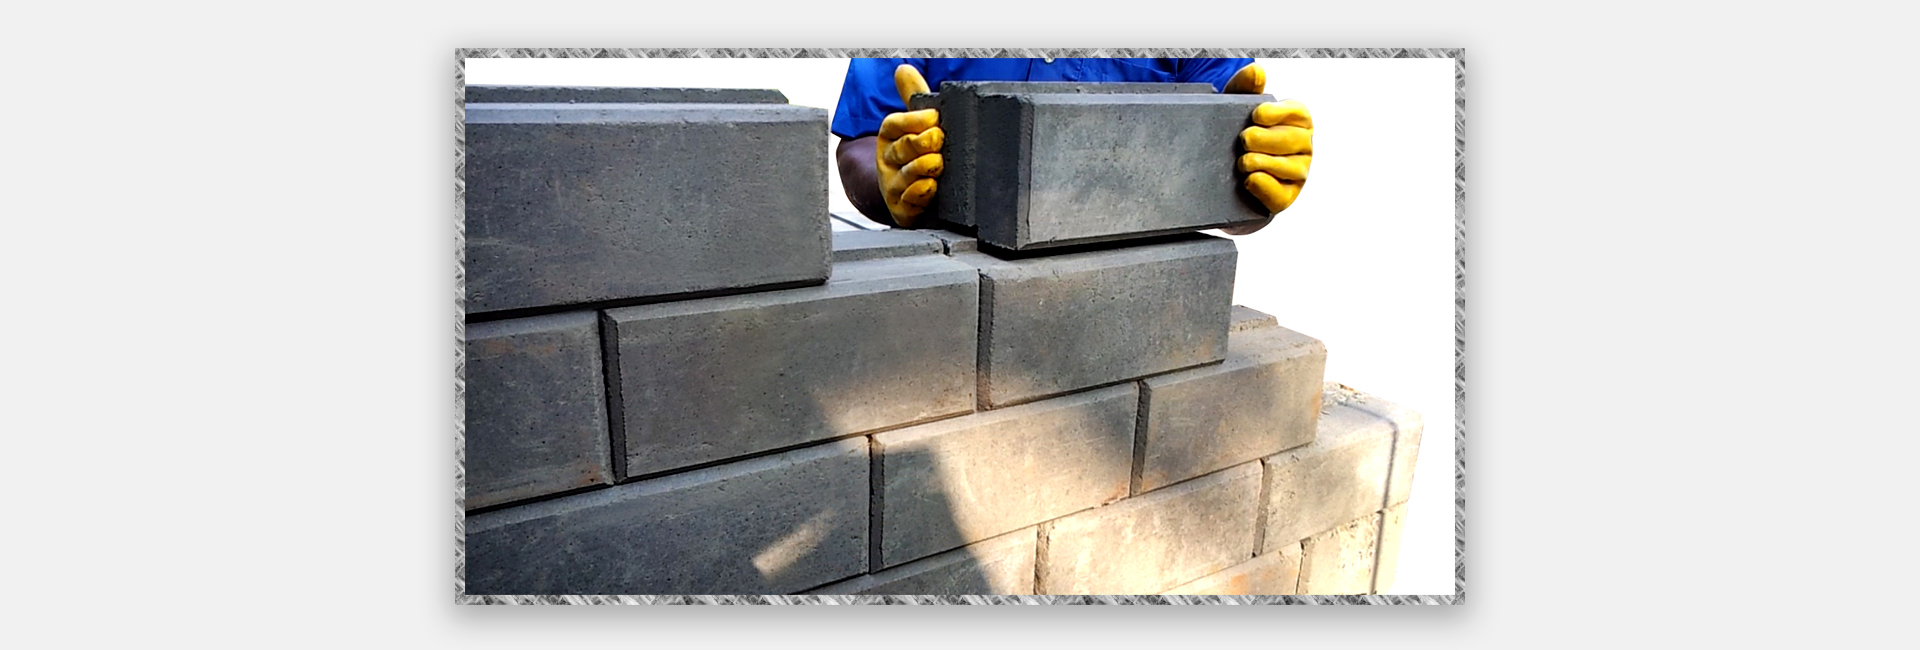 Concrete Interlocking Bricks